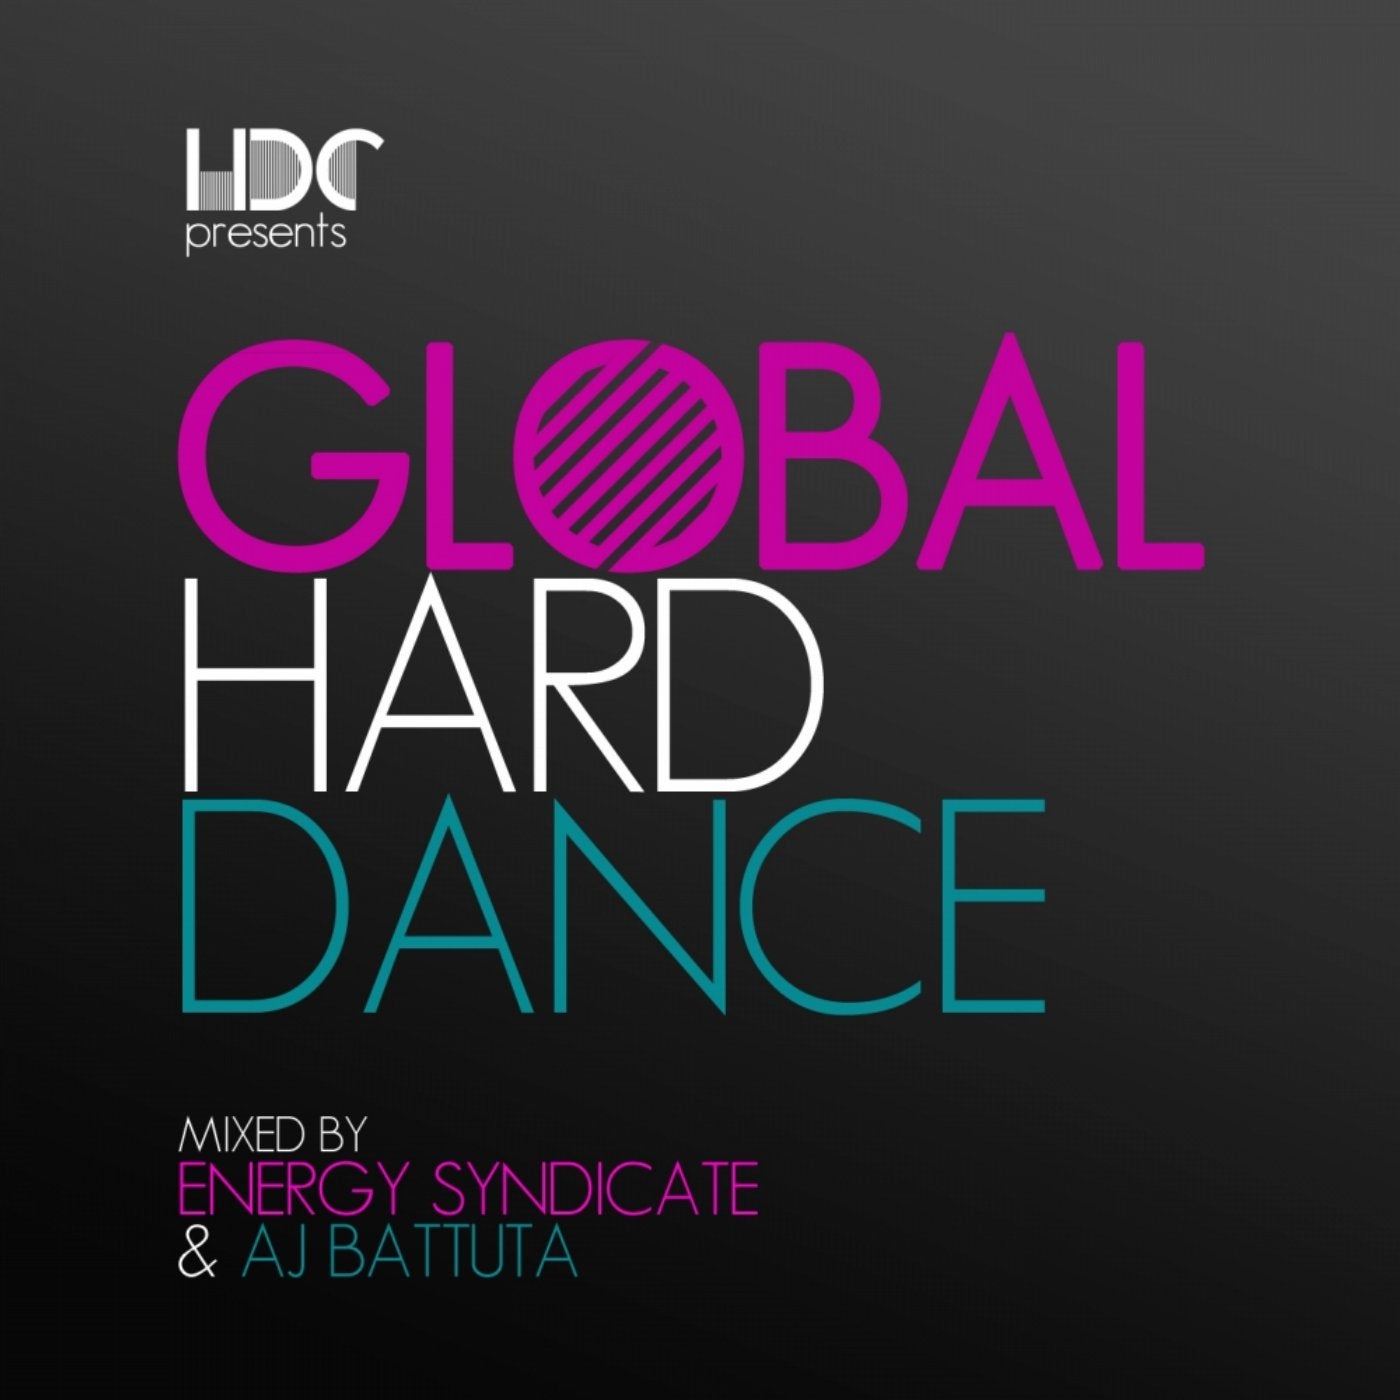 Global Hard Dance, Vol. 1